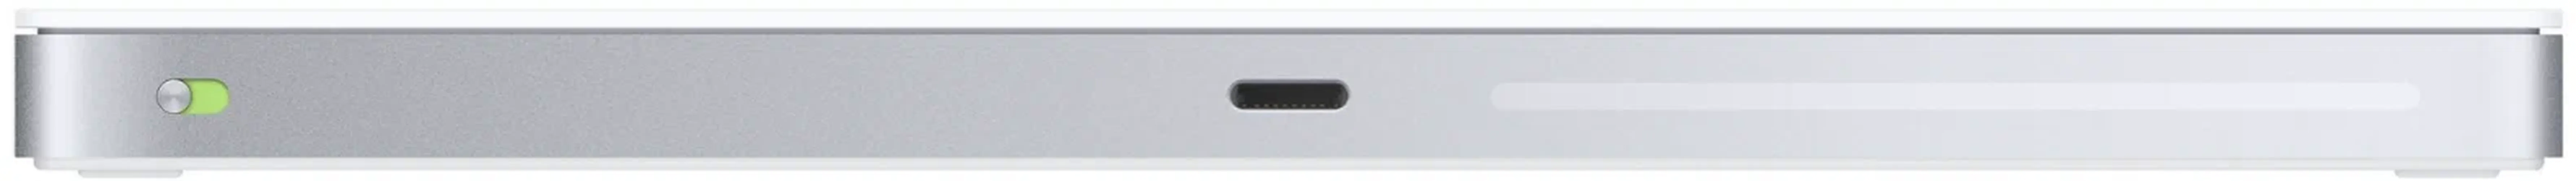 Трекпад Apple Magic Trackpad 3, Серебристый, купить недорого